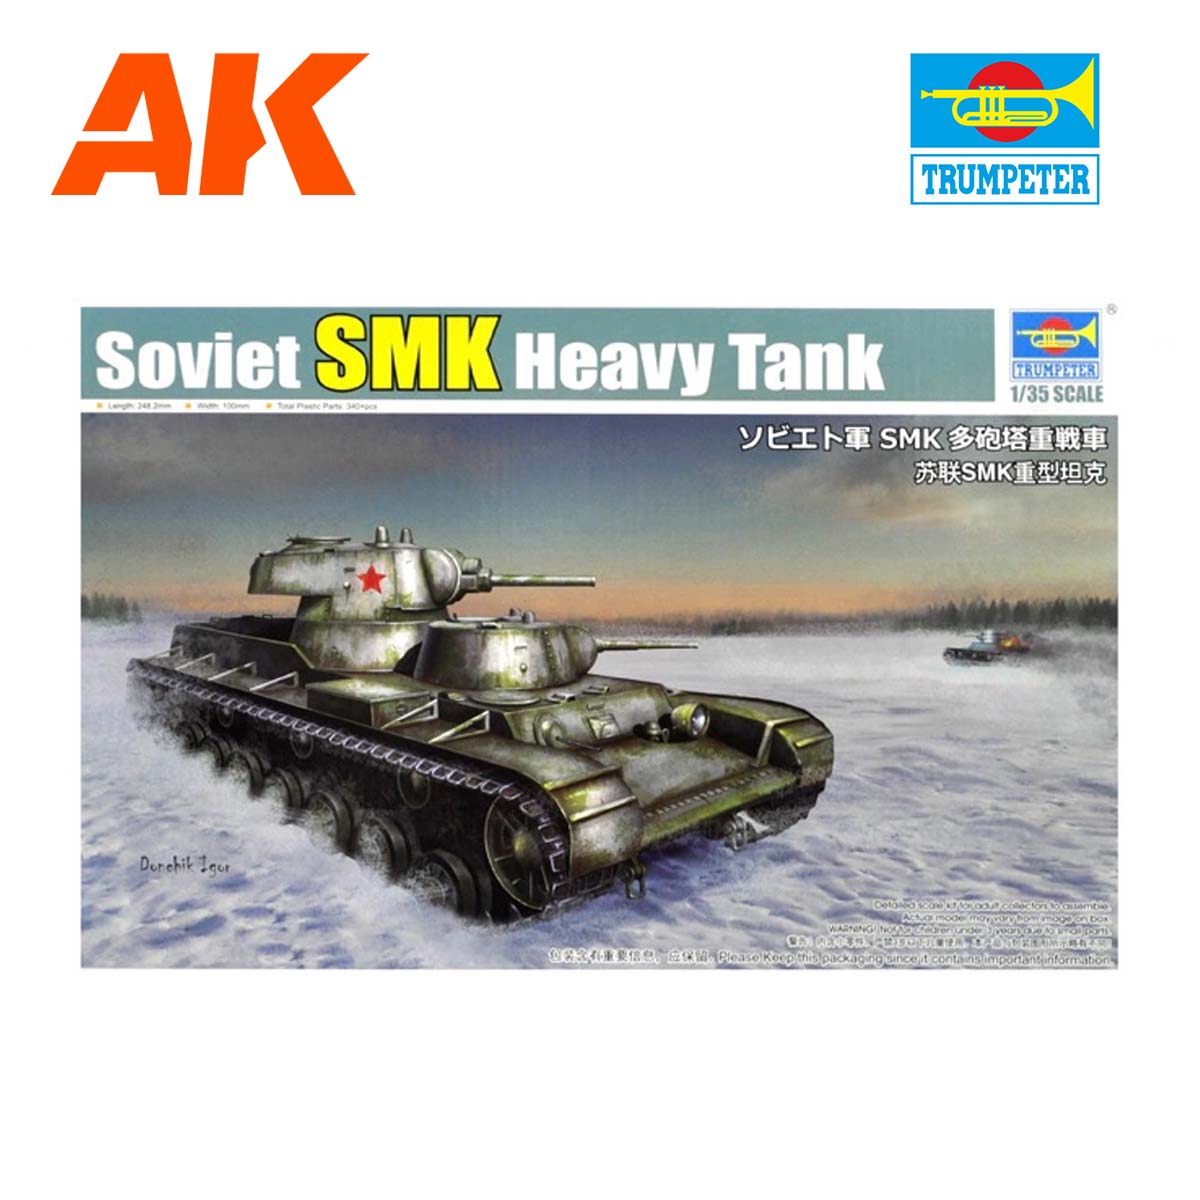 Soviet SMK Heavy tank 1/35